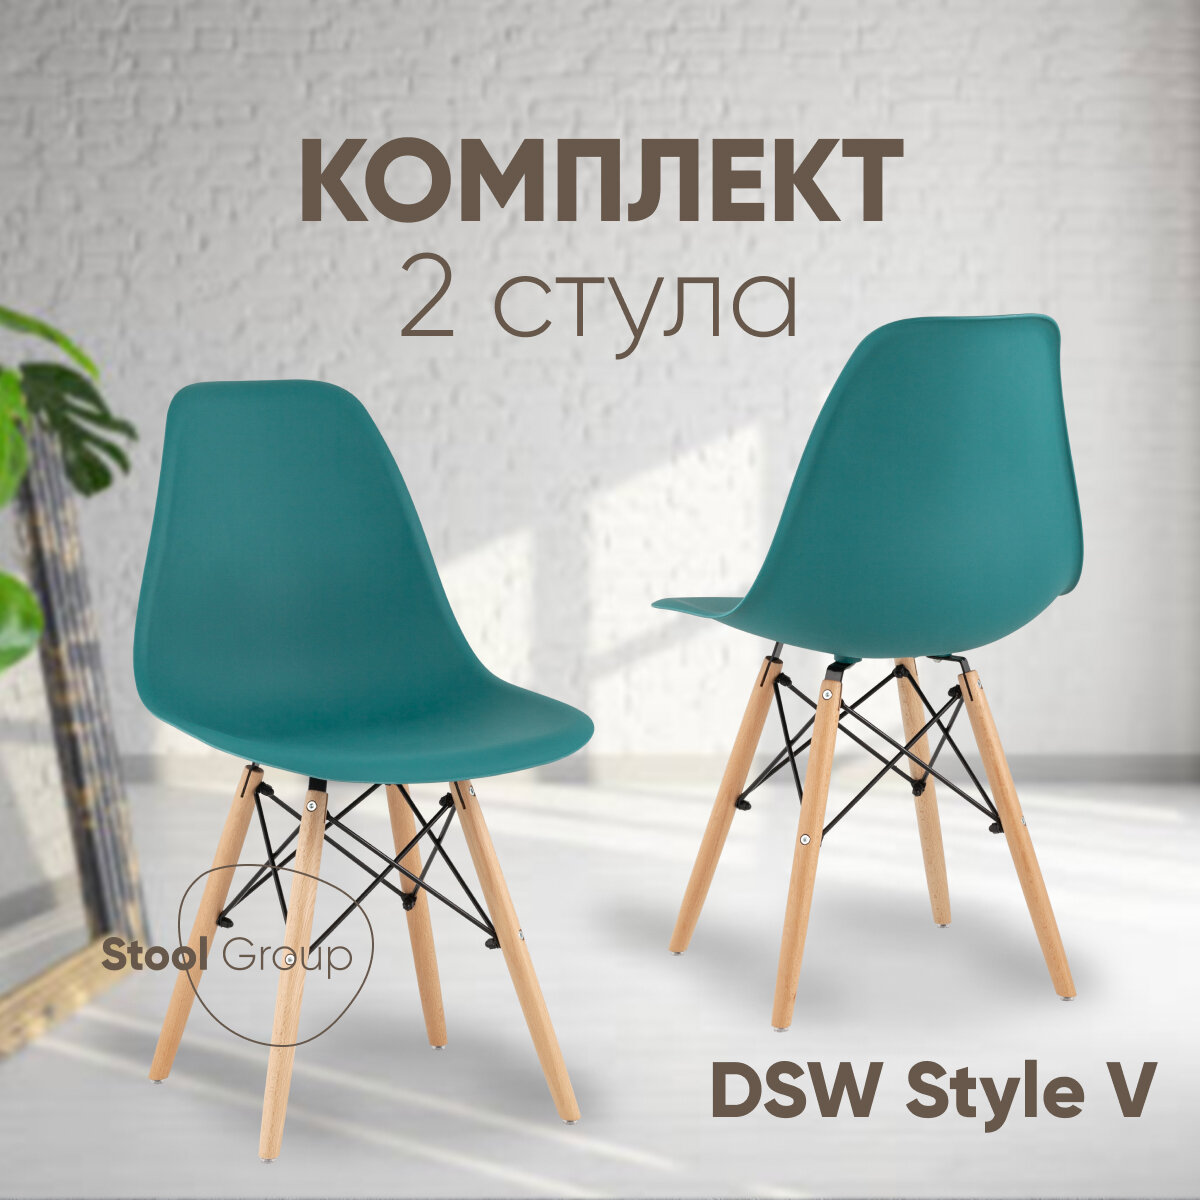 Стул для кухни DSW Style V, темно-бирюзовый, (комплект 2 стула)